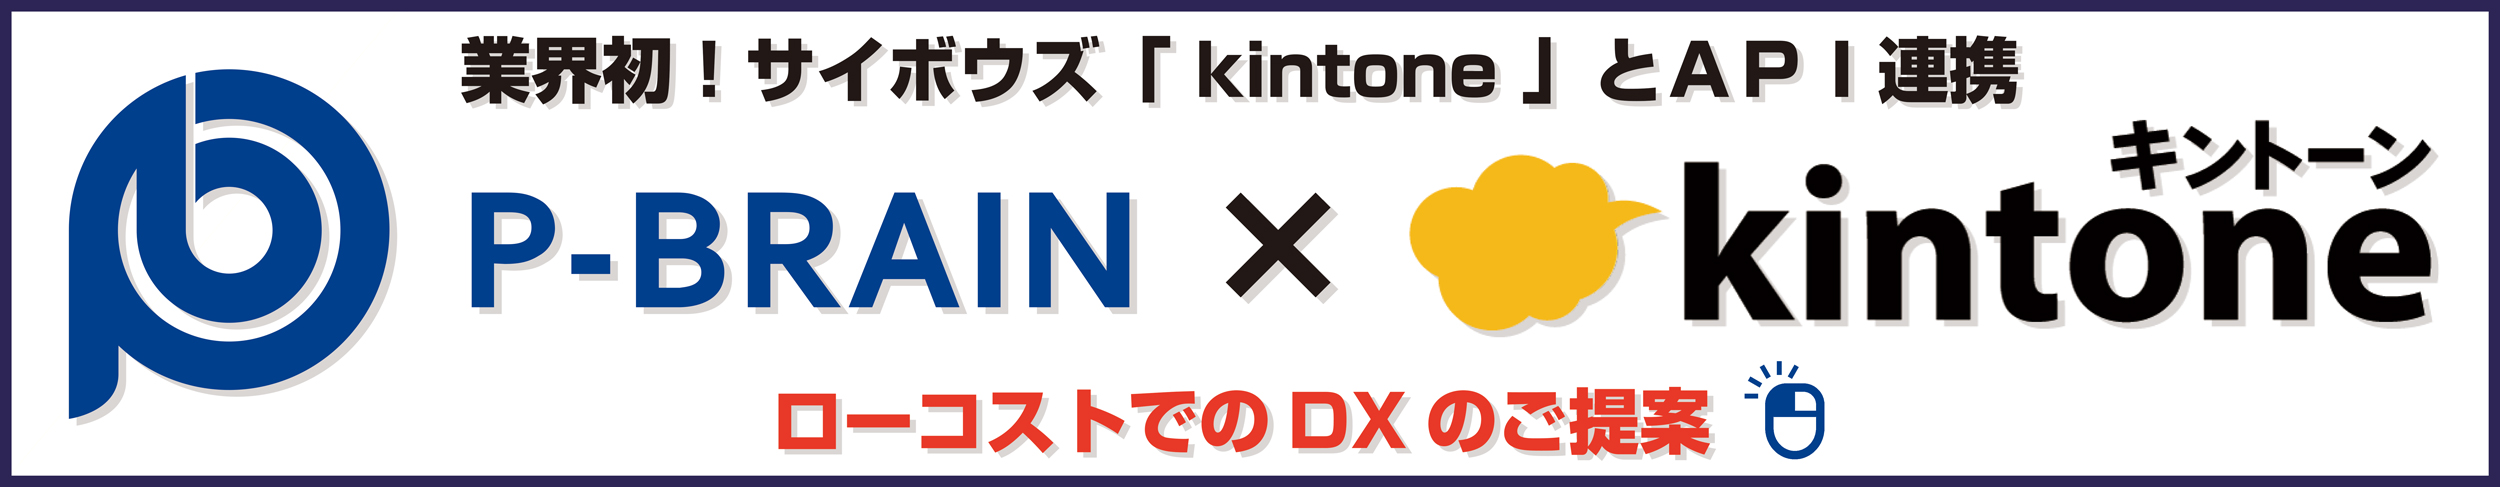 P-BRAIN x kintone ローコストでのDXのご提案